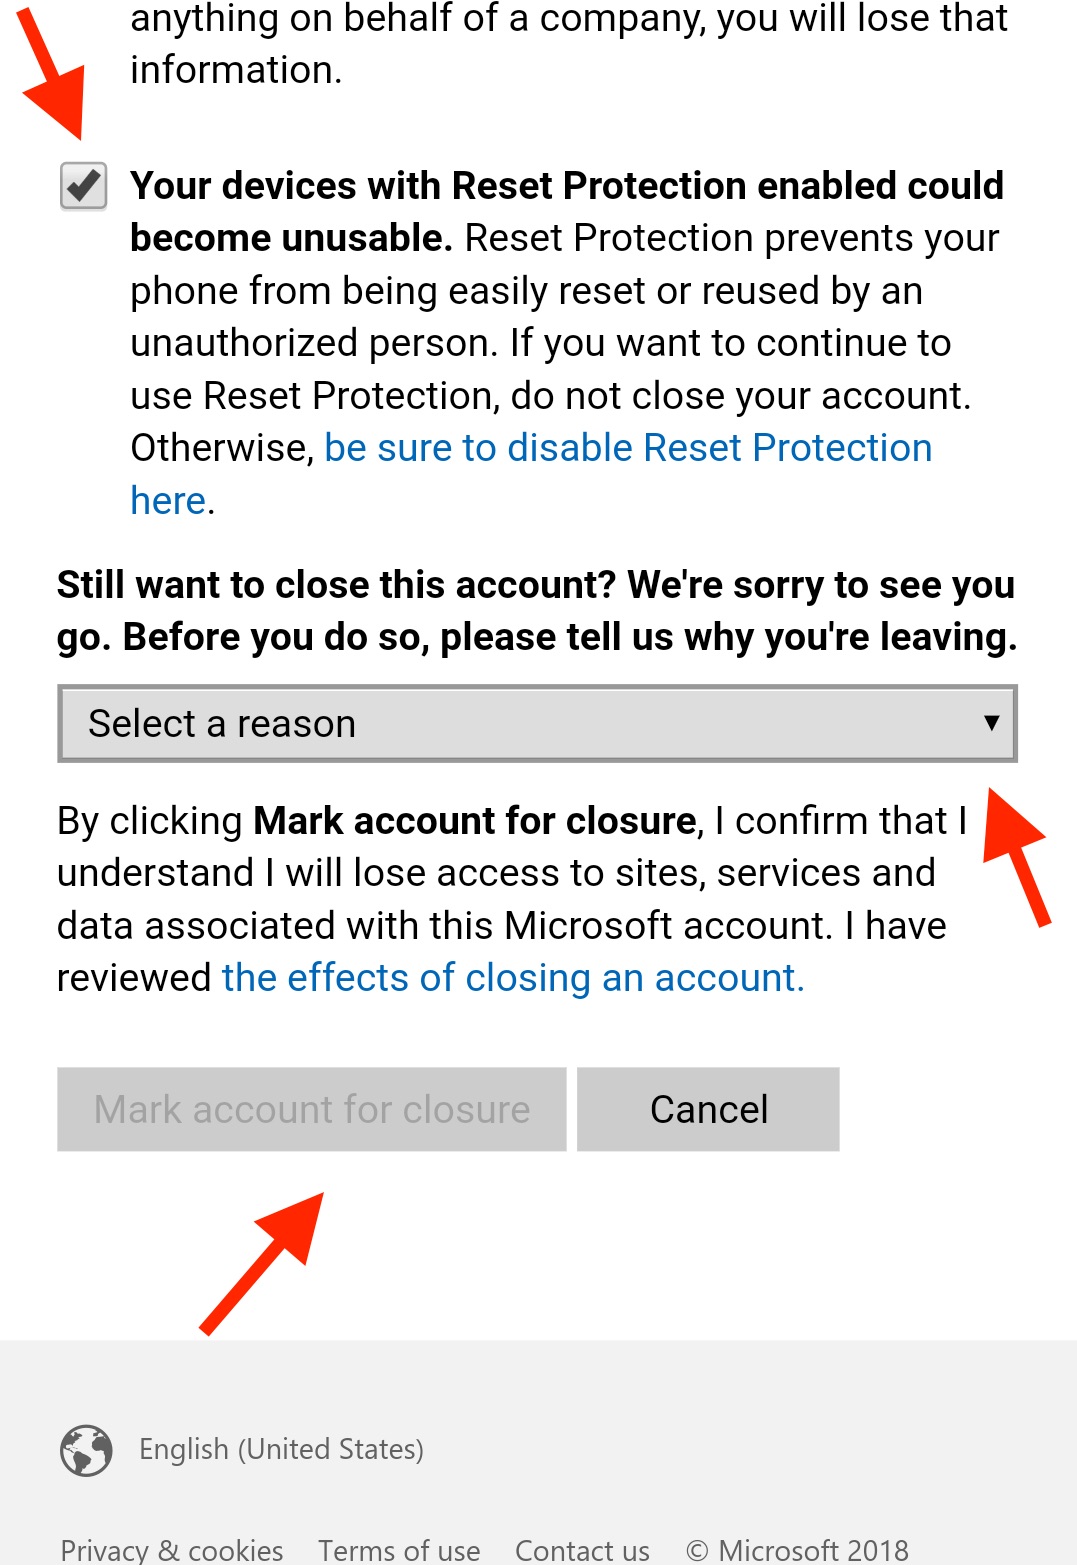 close skype account will it delete gmail